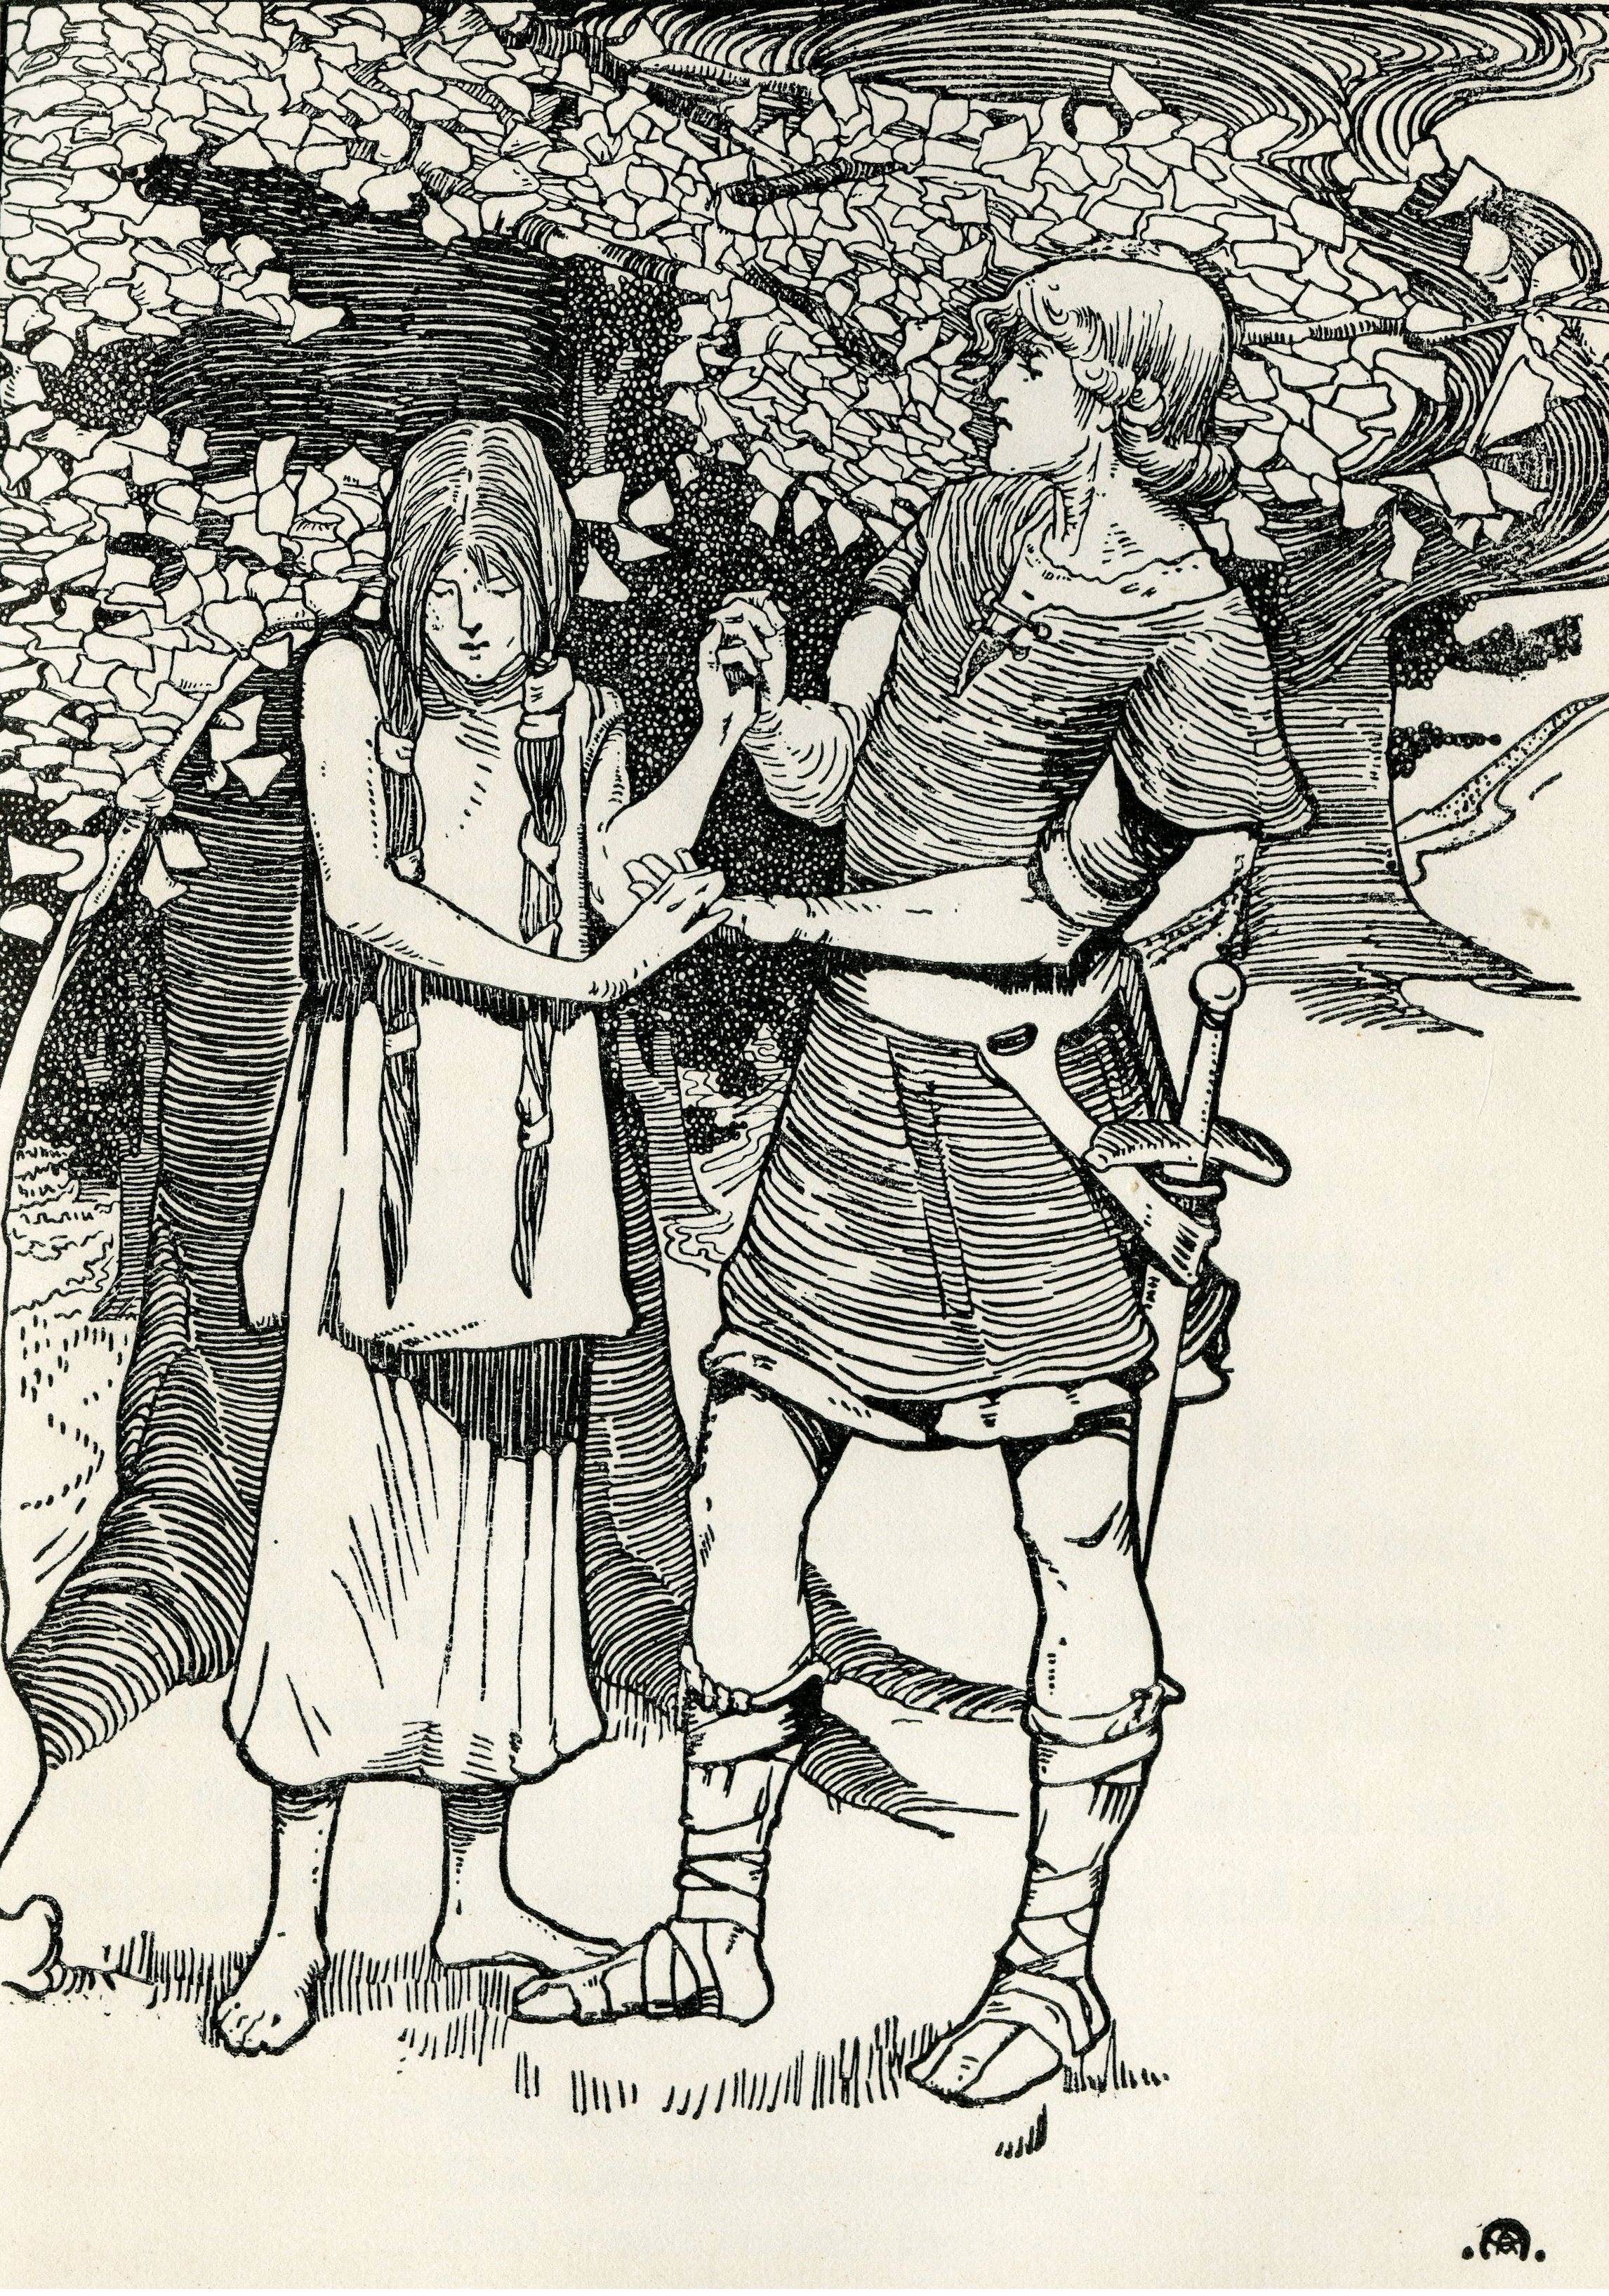 Kráka and Ragnarr